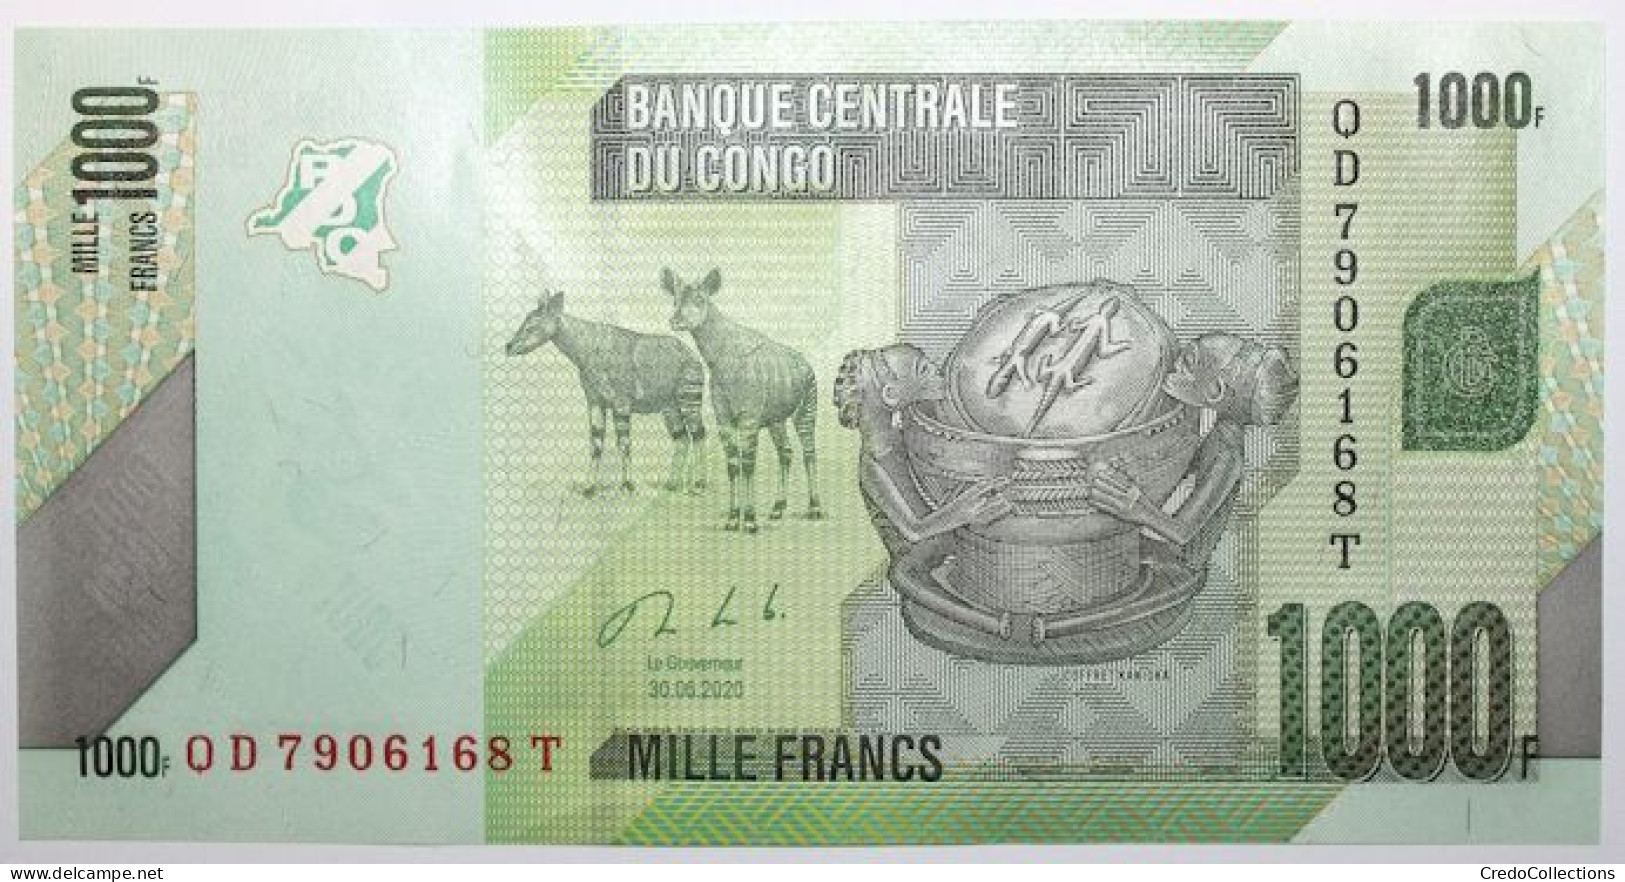 Congo (RD) - 1000 Francs - 2020 - PICK 101c - NEUF - Democratic Republic Of The Congo & Zaire